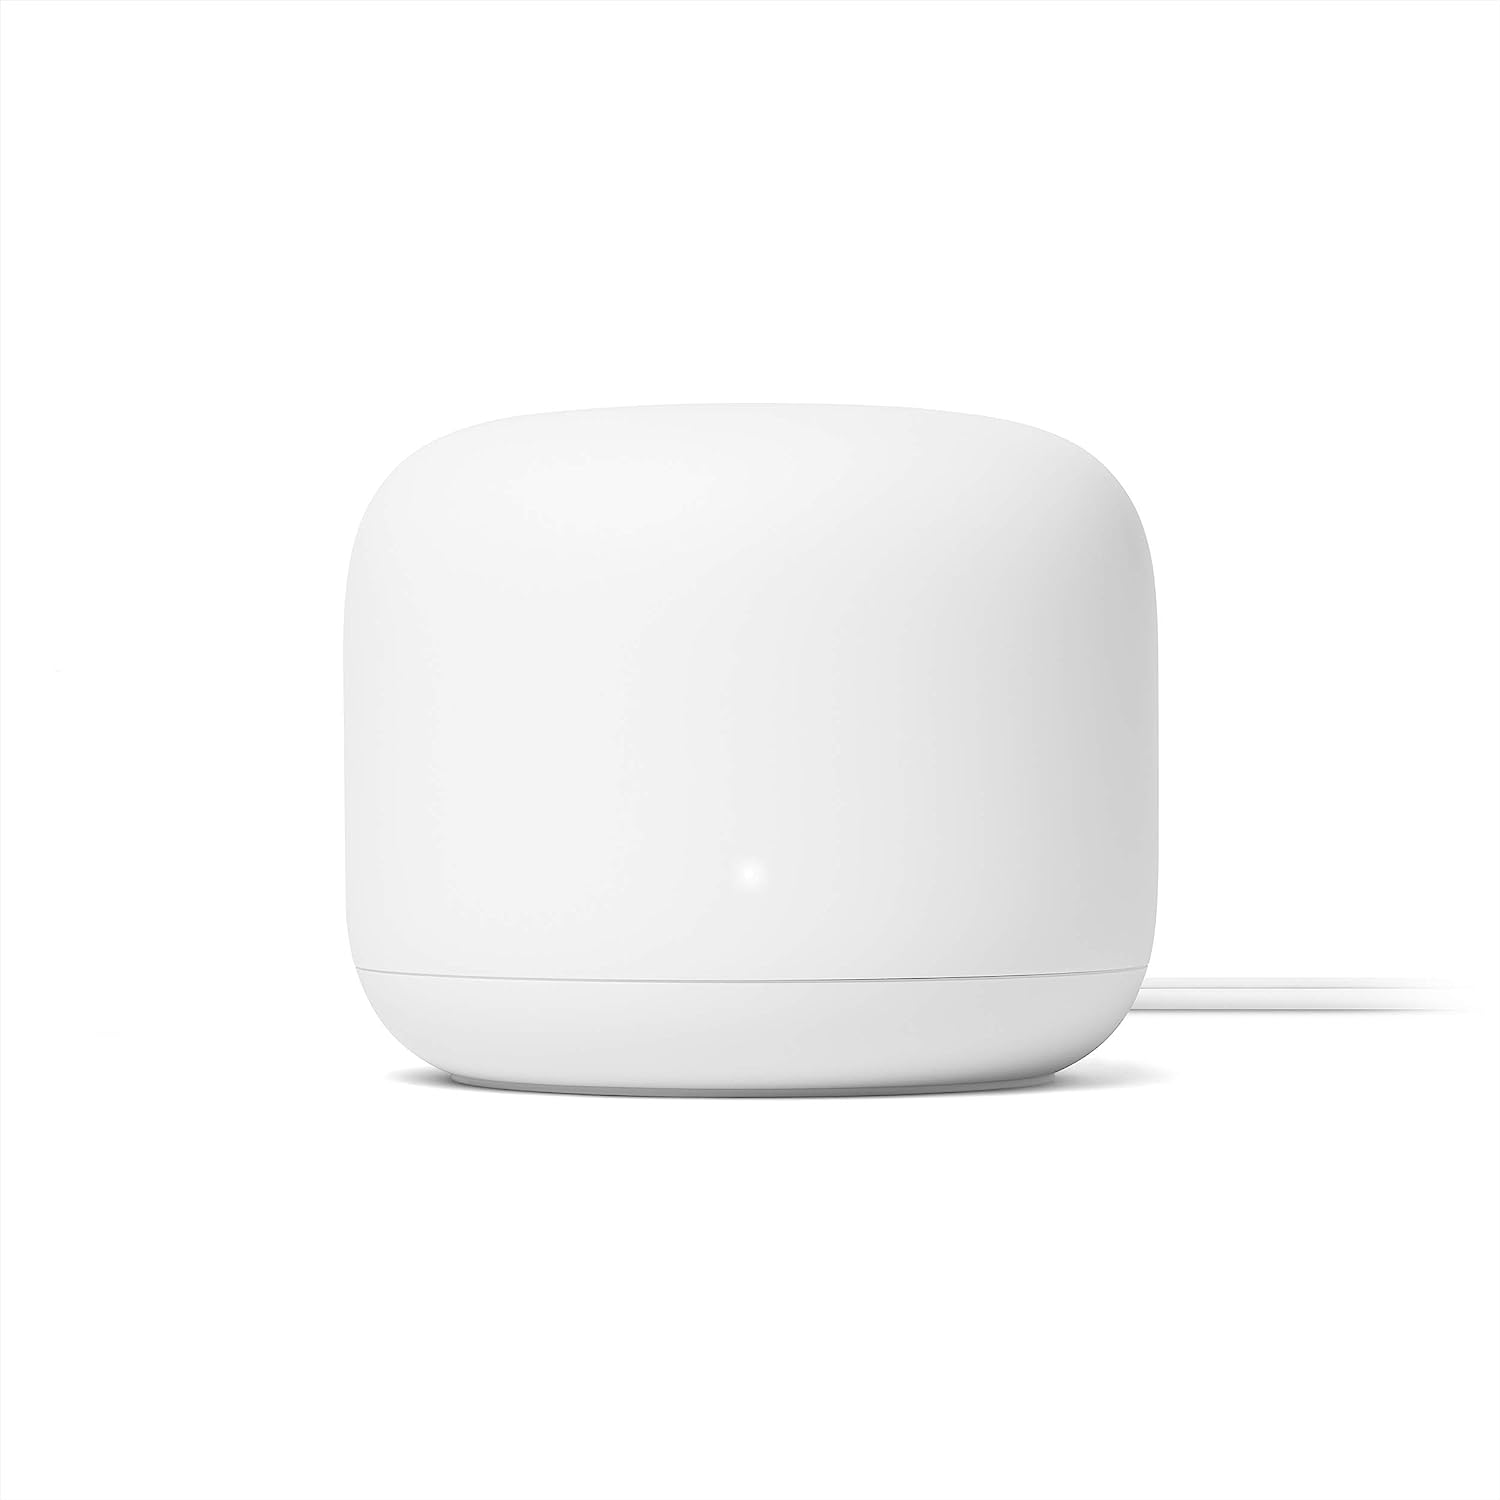 Wi-Fi роутер Google Nest Wifi Mesh WiFi System AC2200, белый